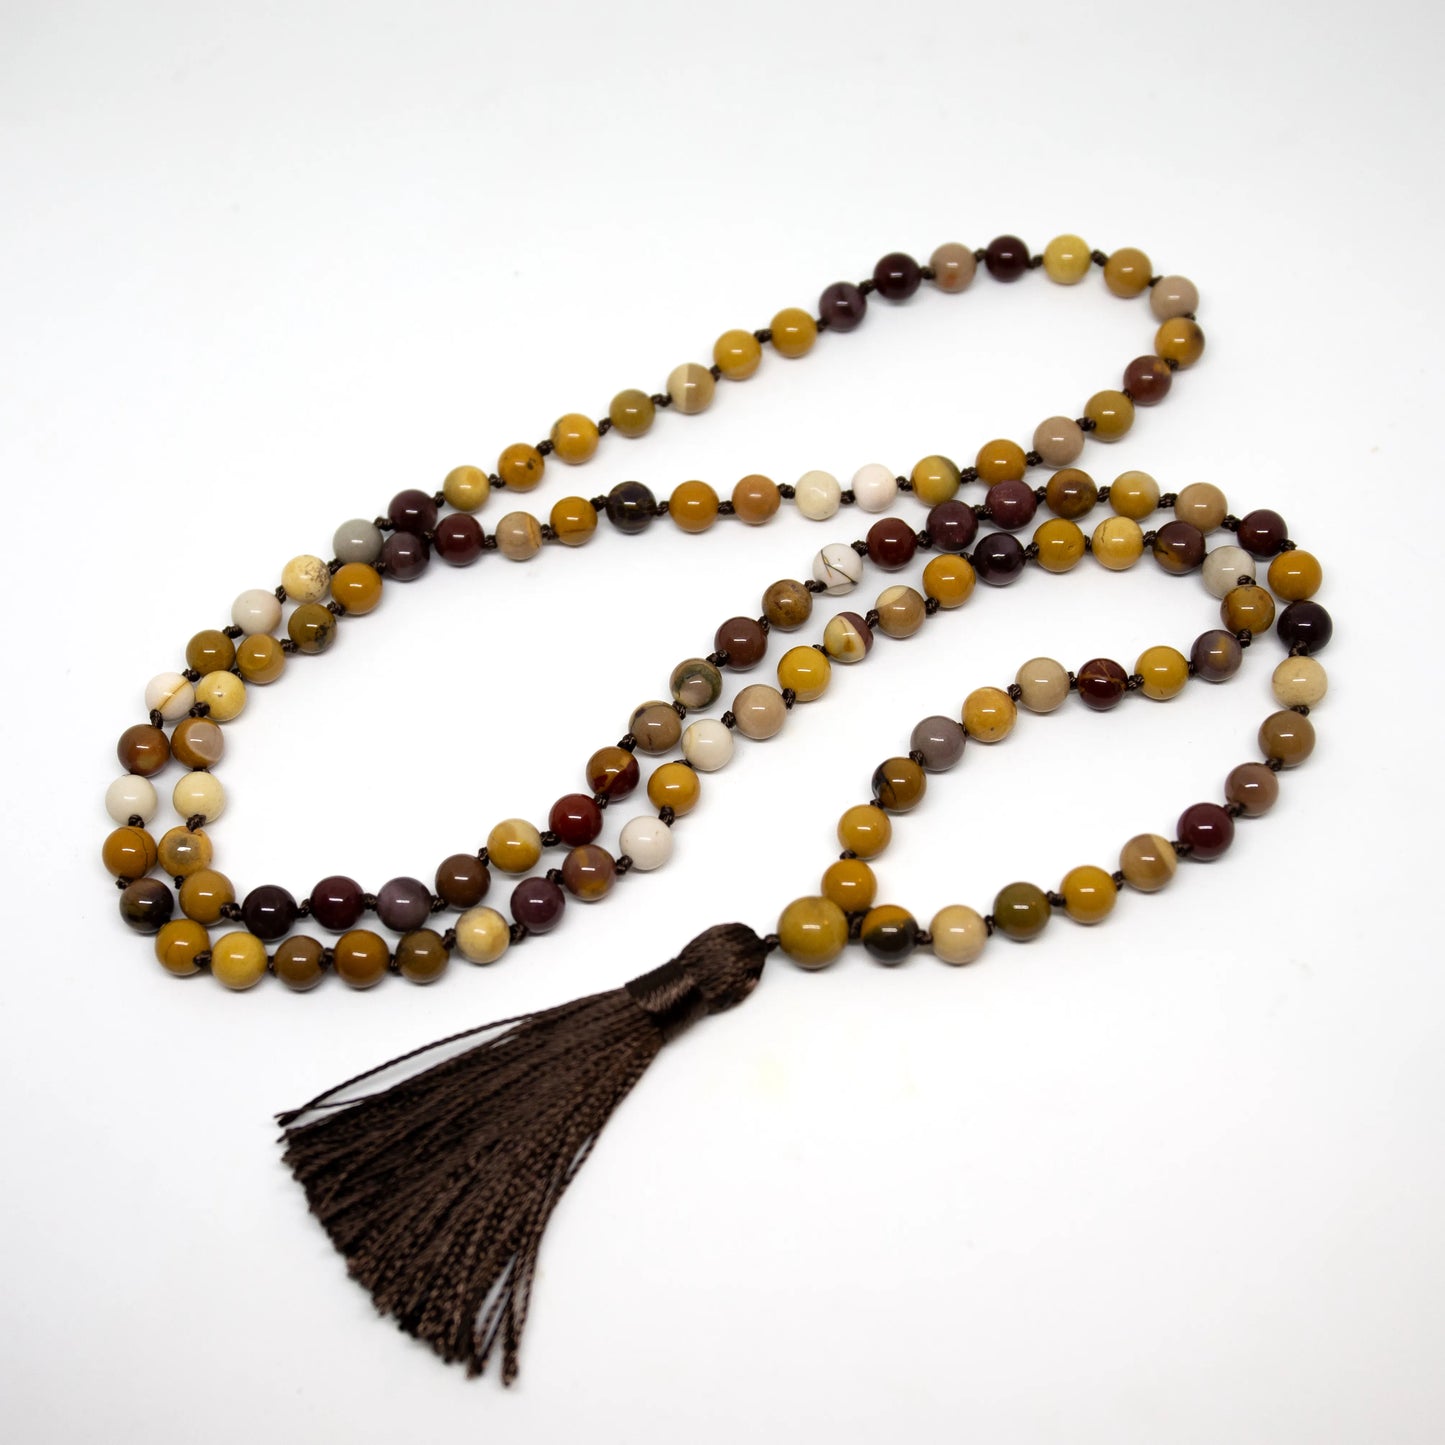 Mookaite Knotted 108 Bead Mala - Prayer Beads - 8mm (1 Pack)